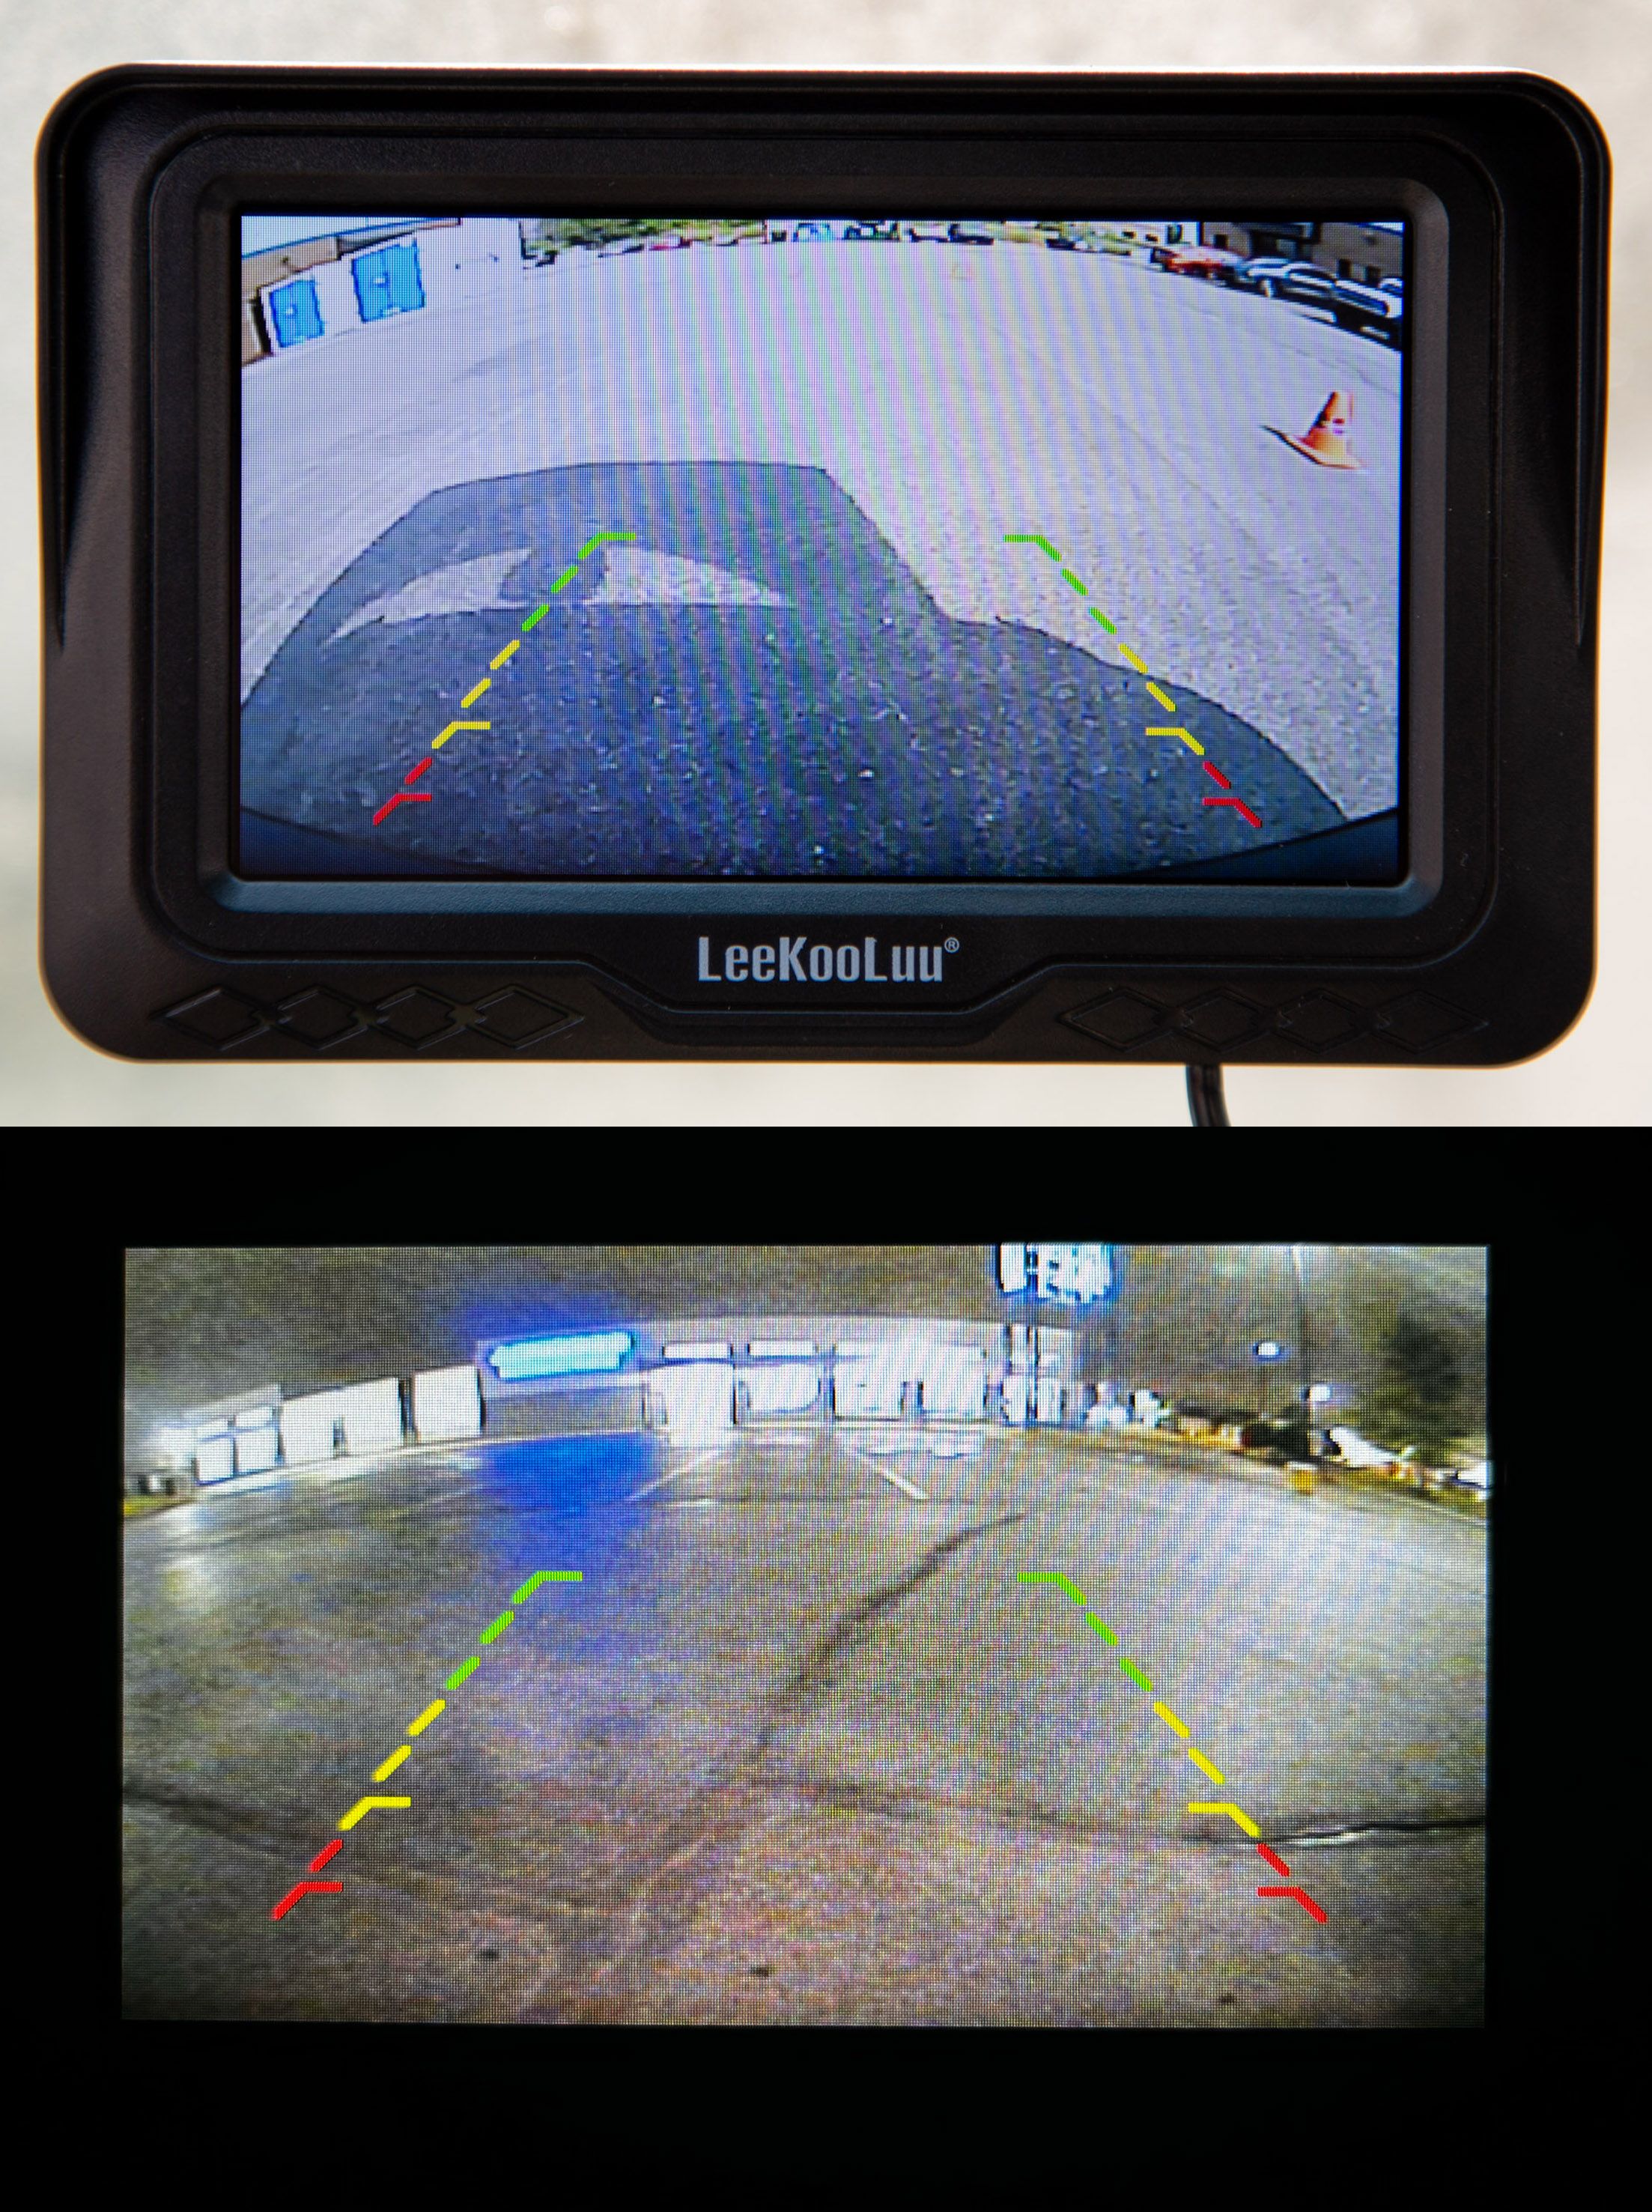 Dash Cams & Backup Cameras - Best Dashboard & Backup Cameras for Cars